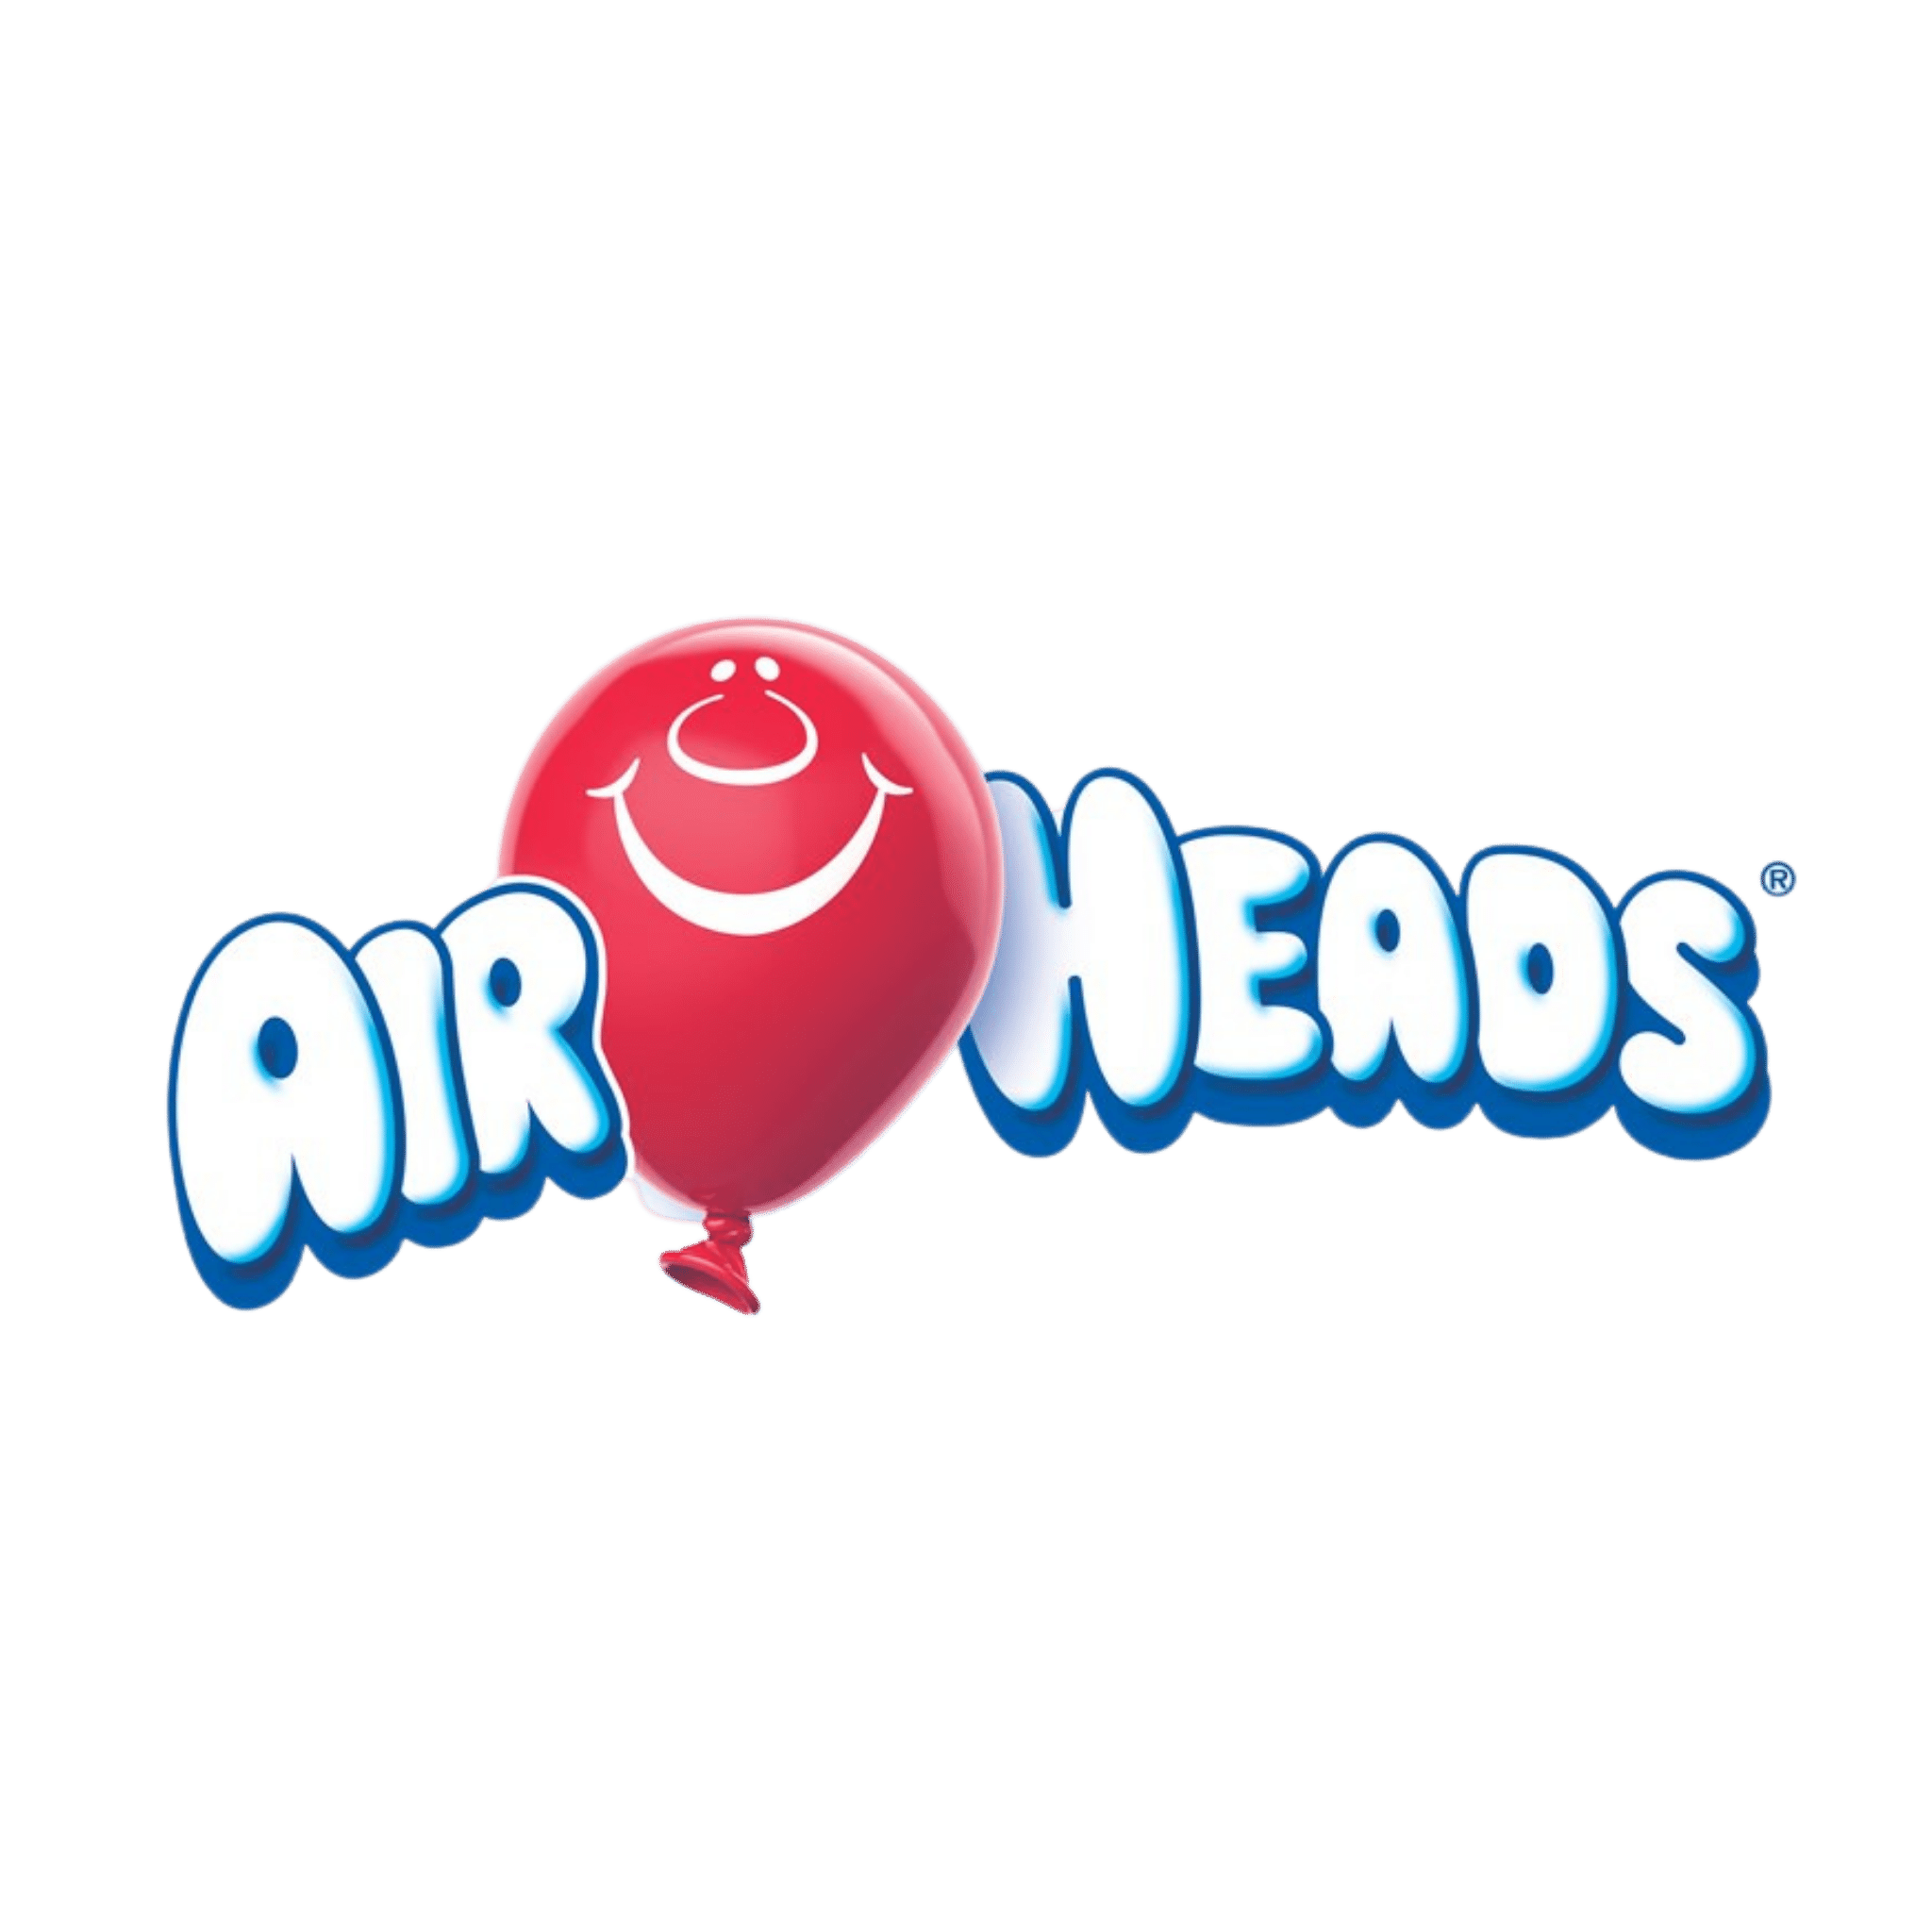 Airheads - Gum | O'Sweetz | Reviews on Judge.me